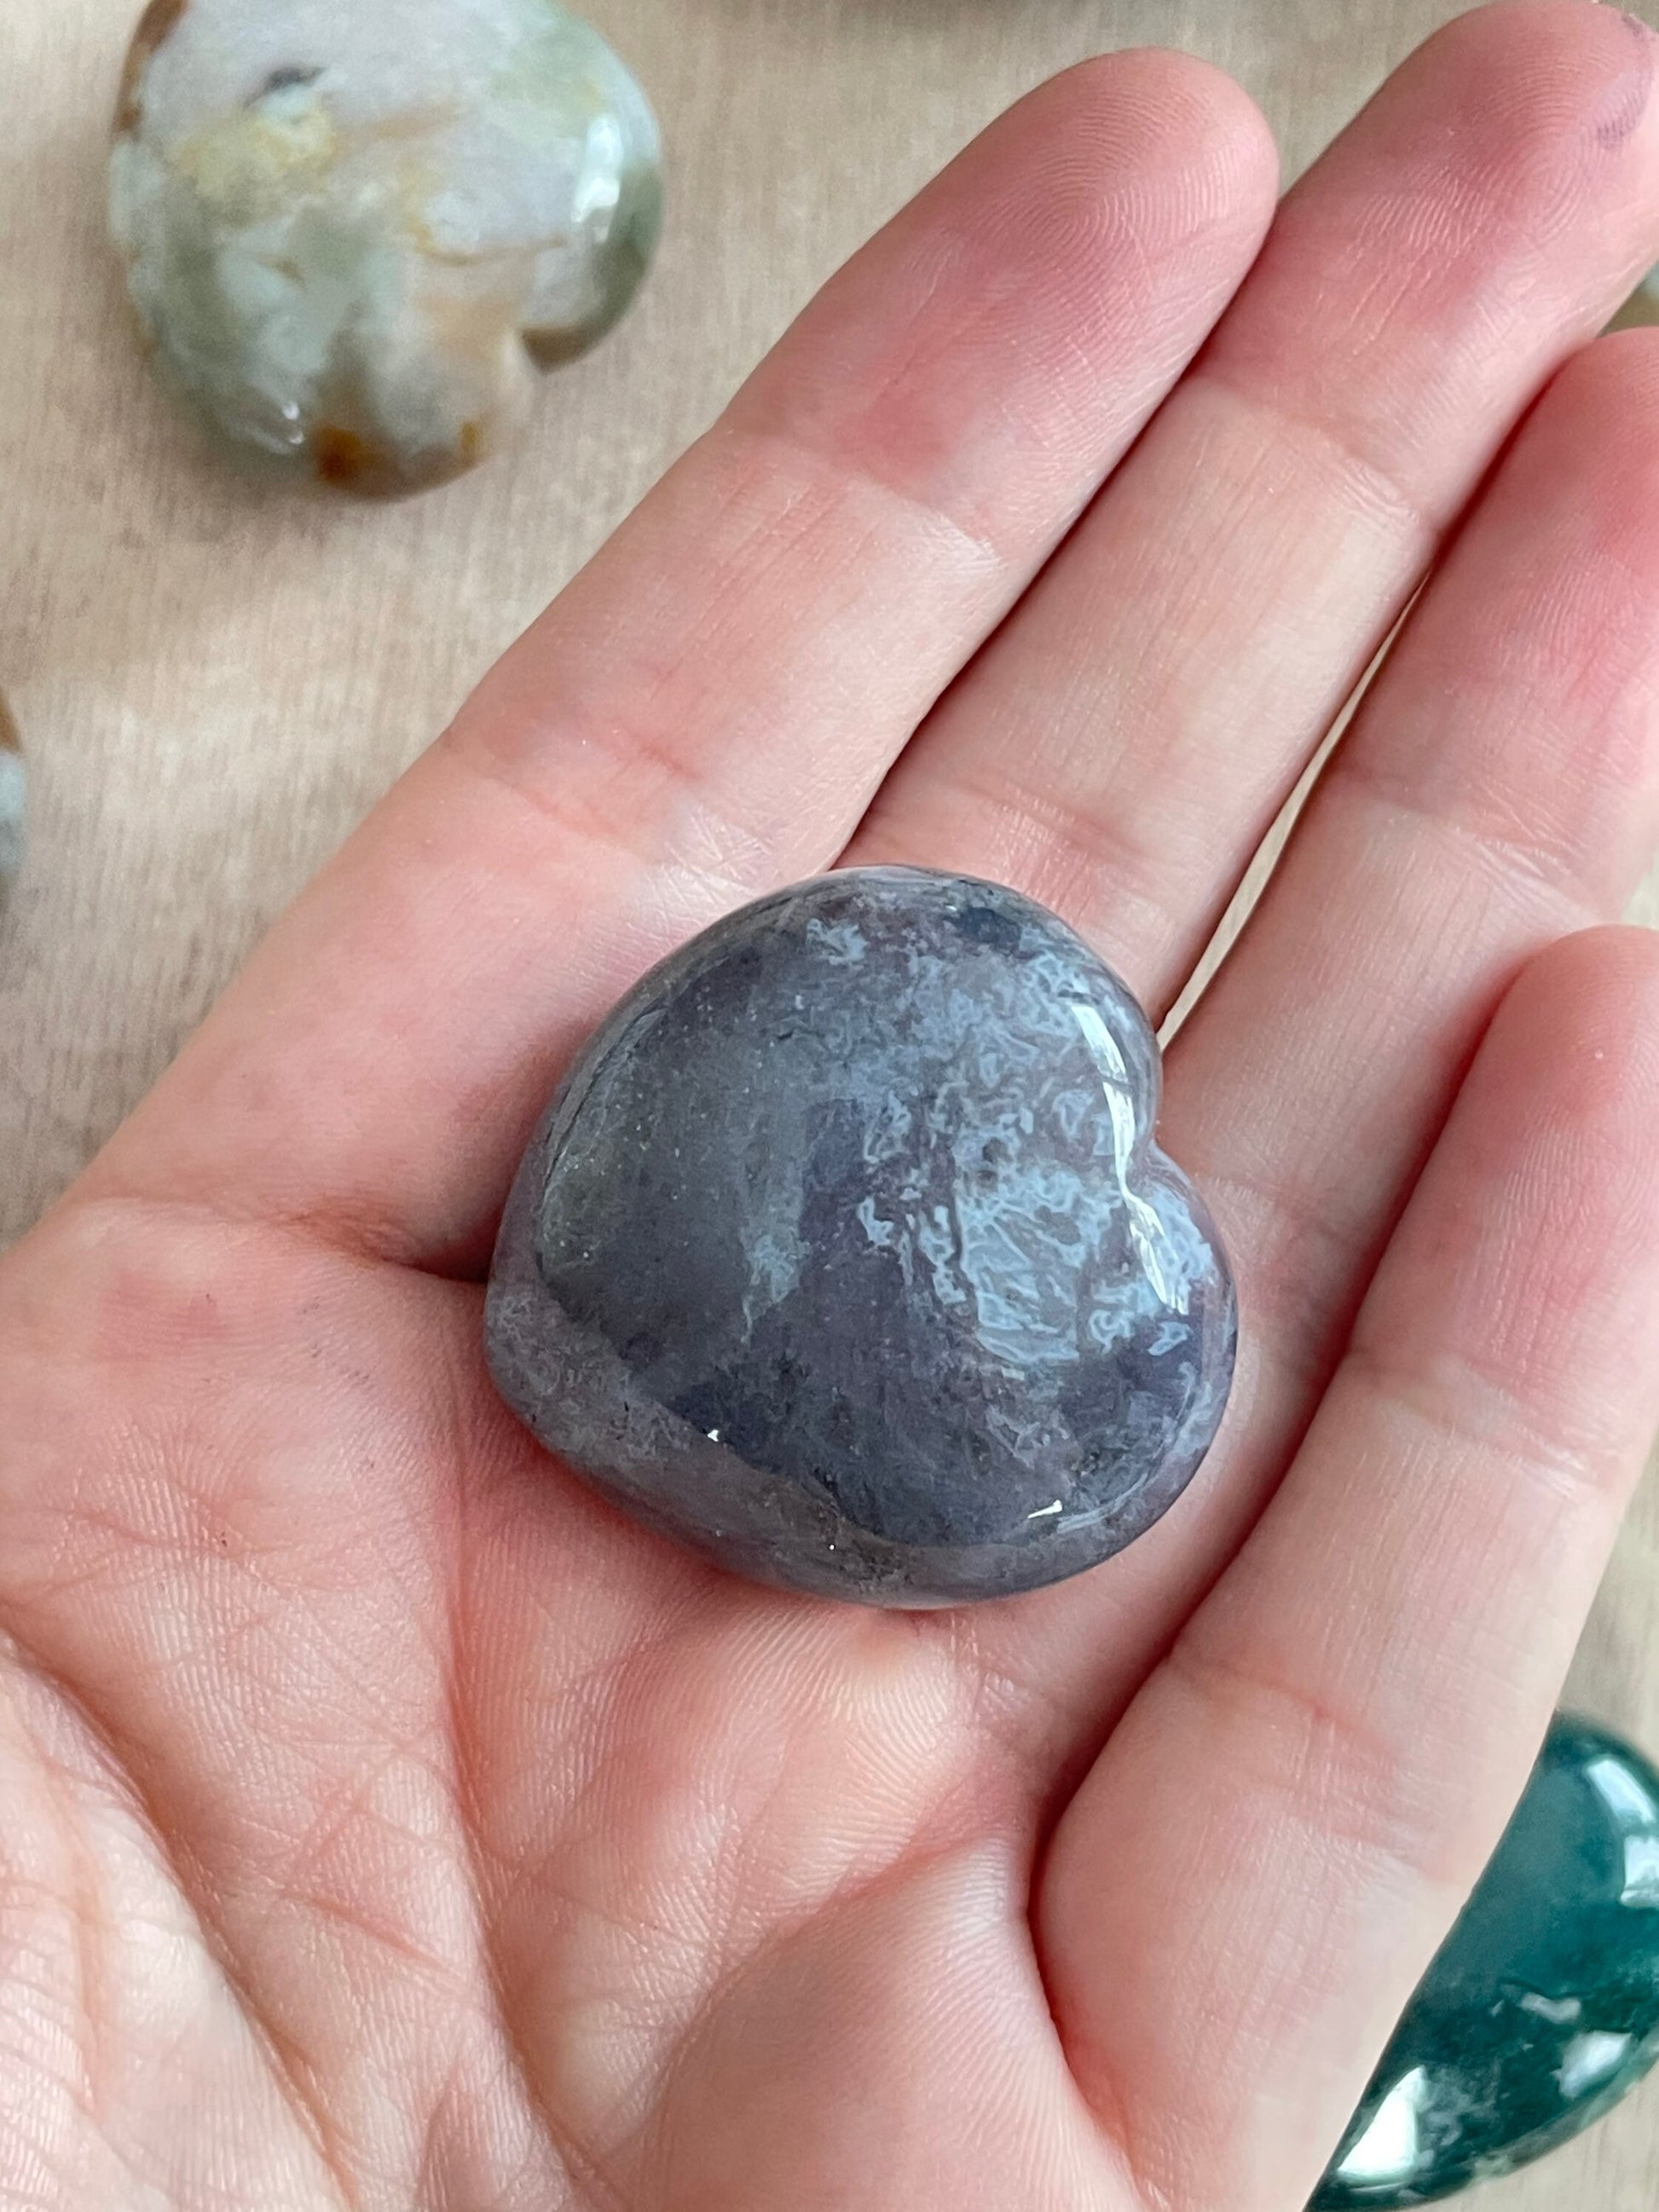 Ocean Jasper Heart Stone 